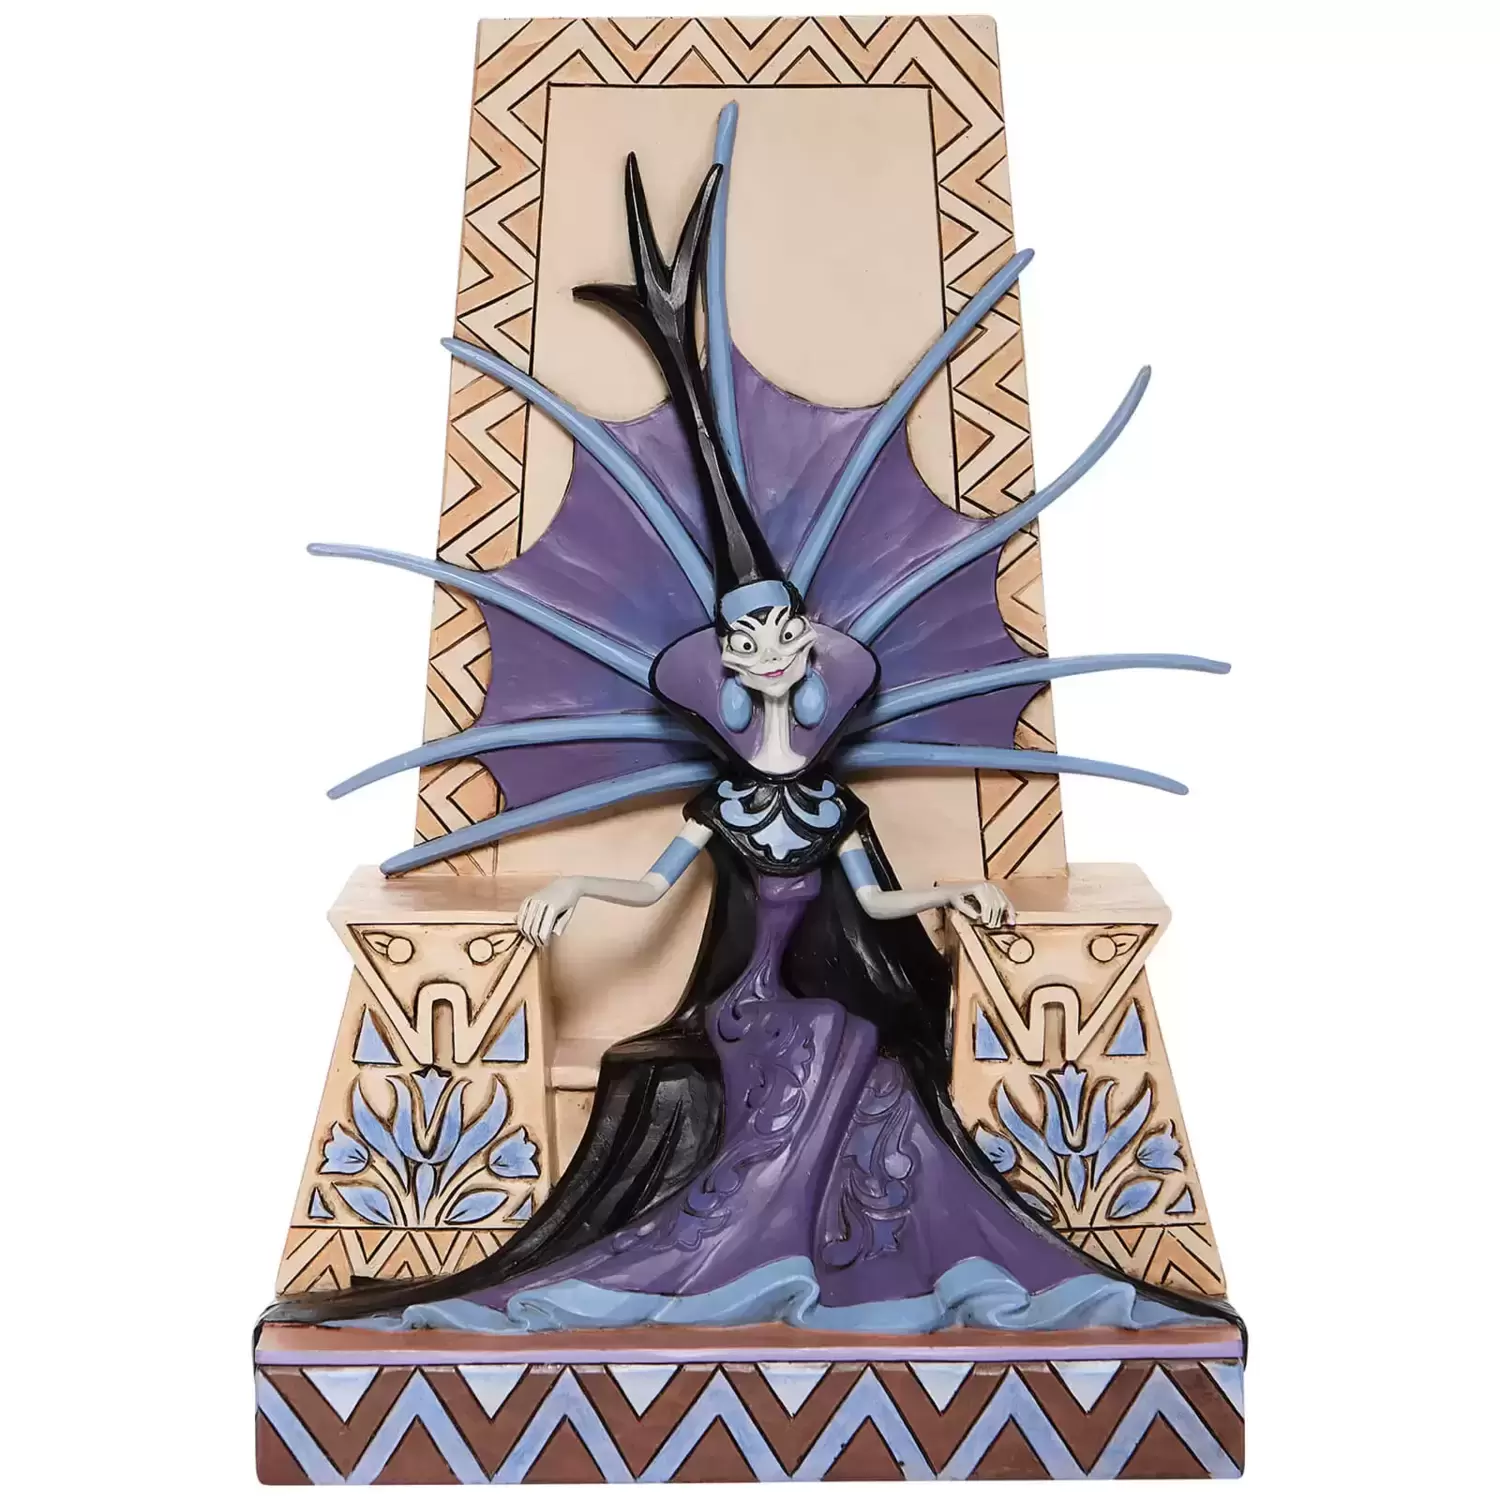 Disney Traditions by Jim Shore - Yzma - Disney Villain